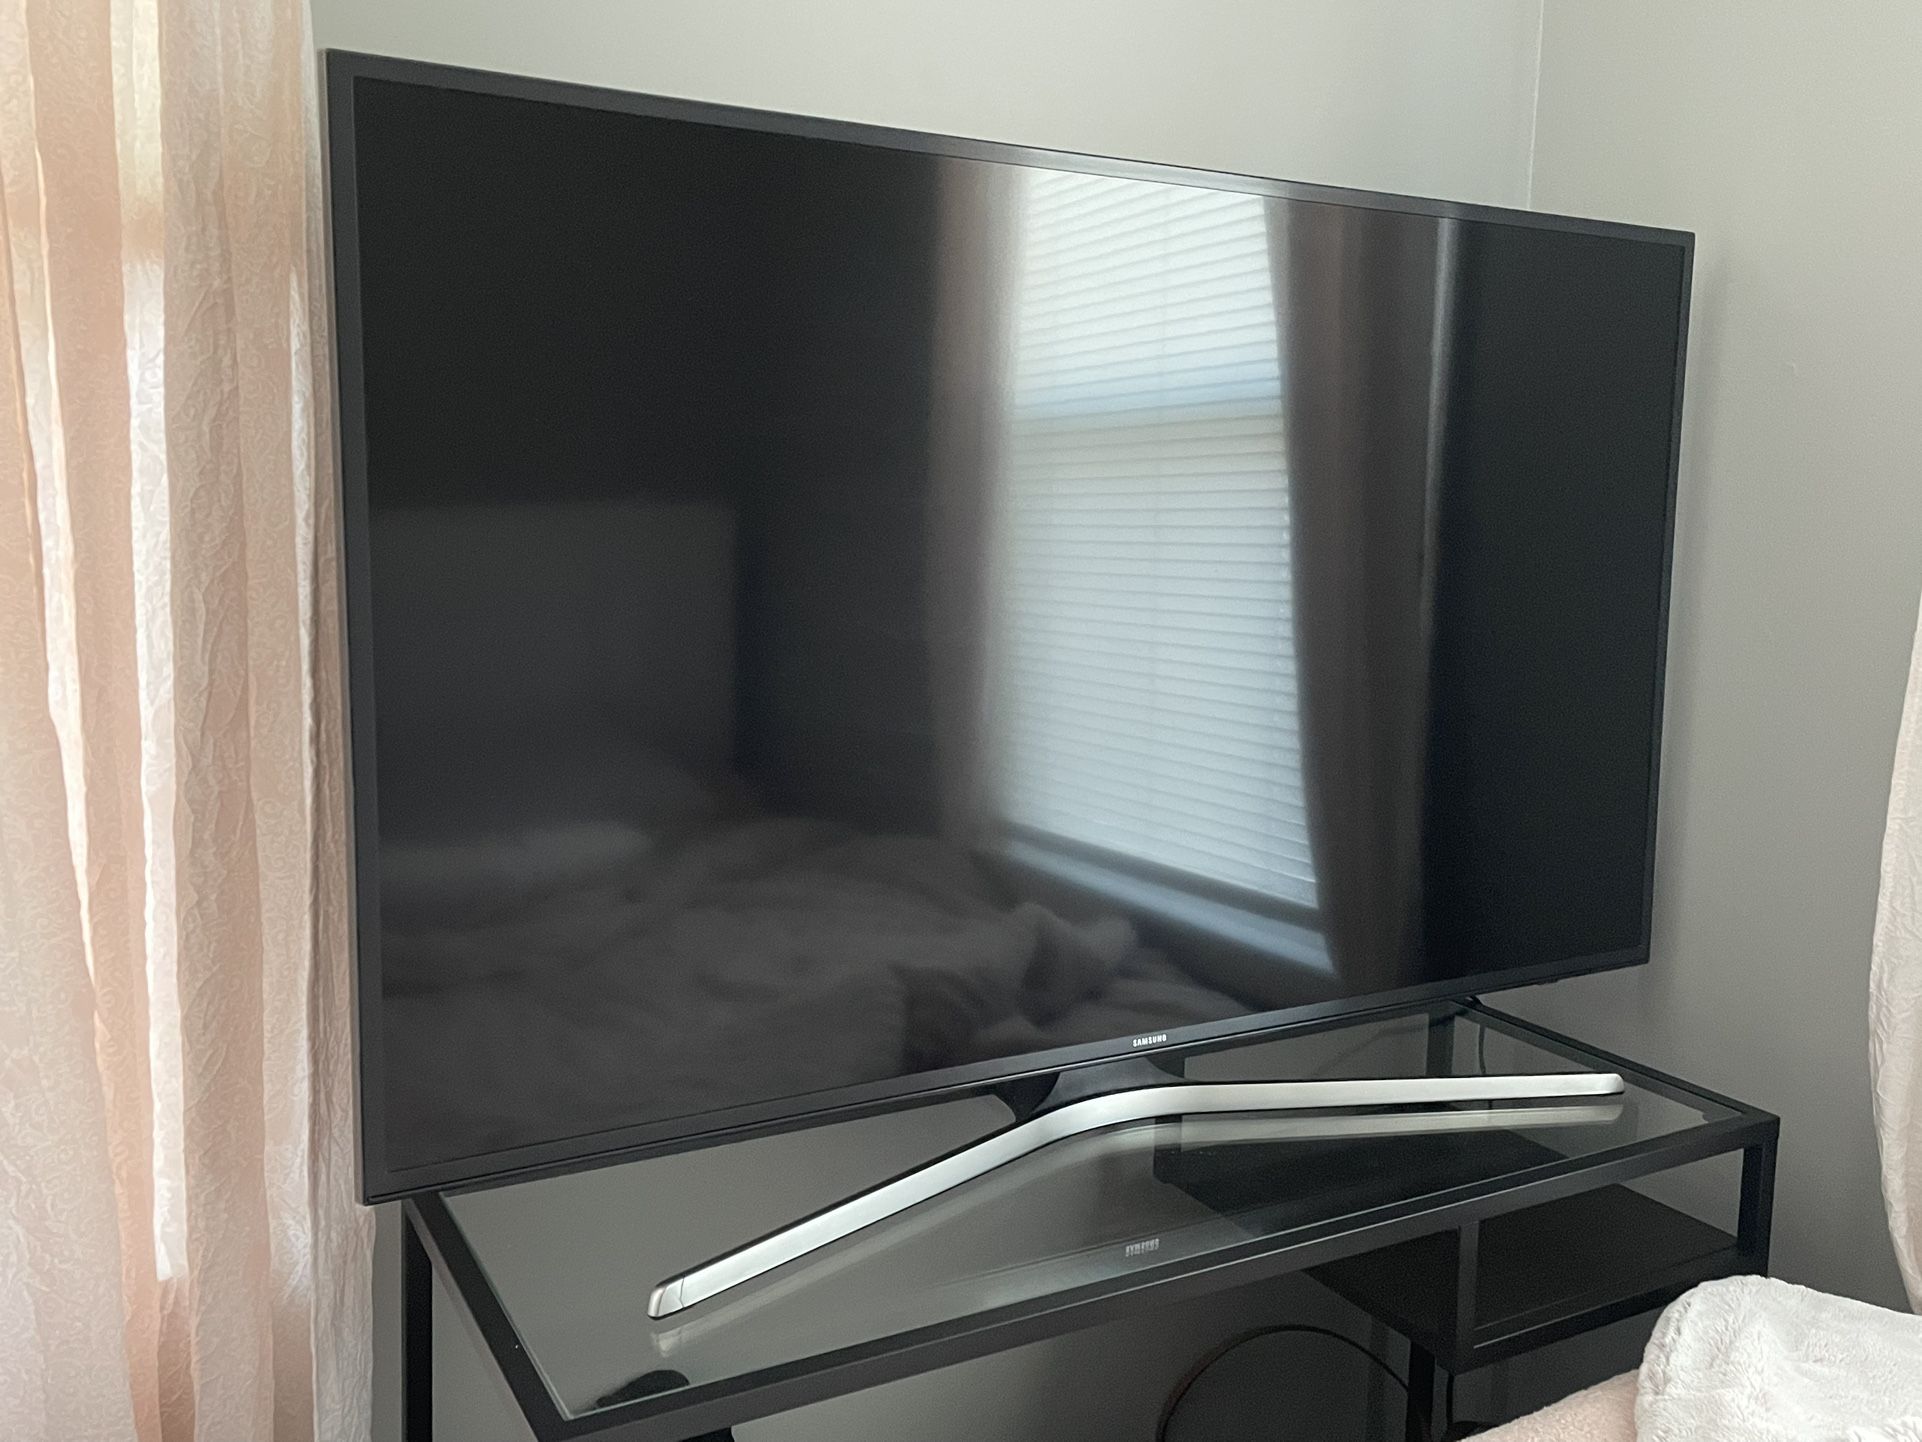 Samsung 50 inch tv